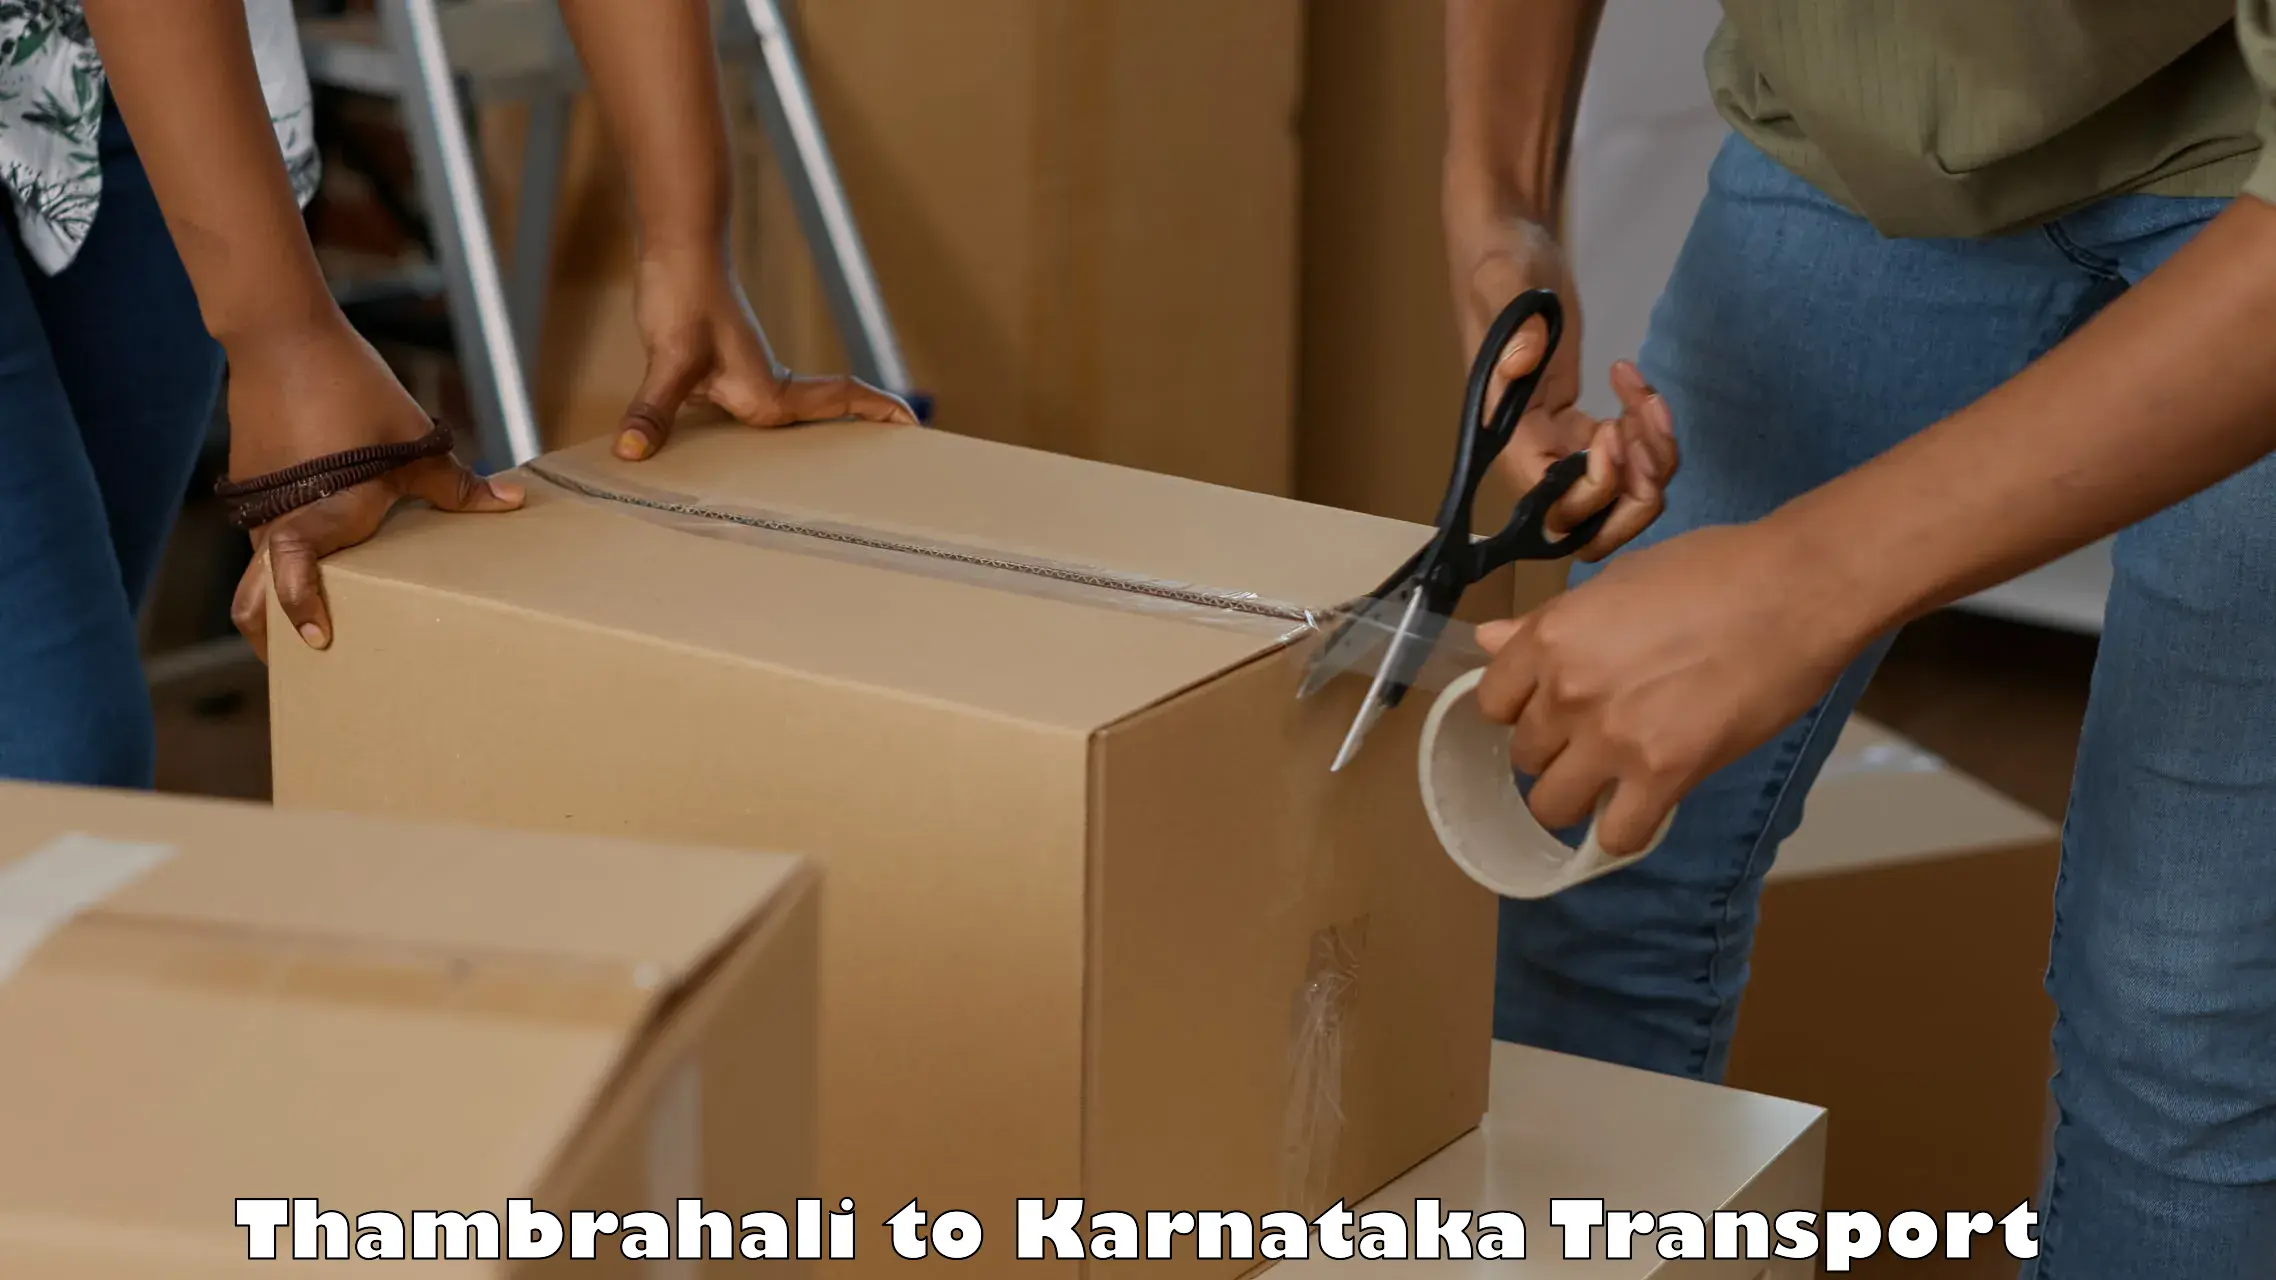 Bike transport service Thambrahali to Karnataka